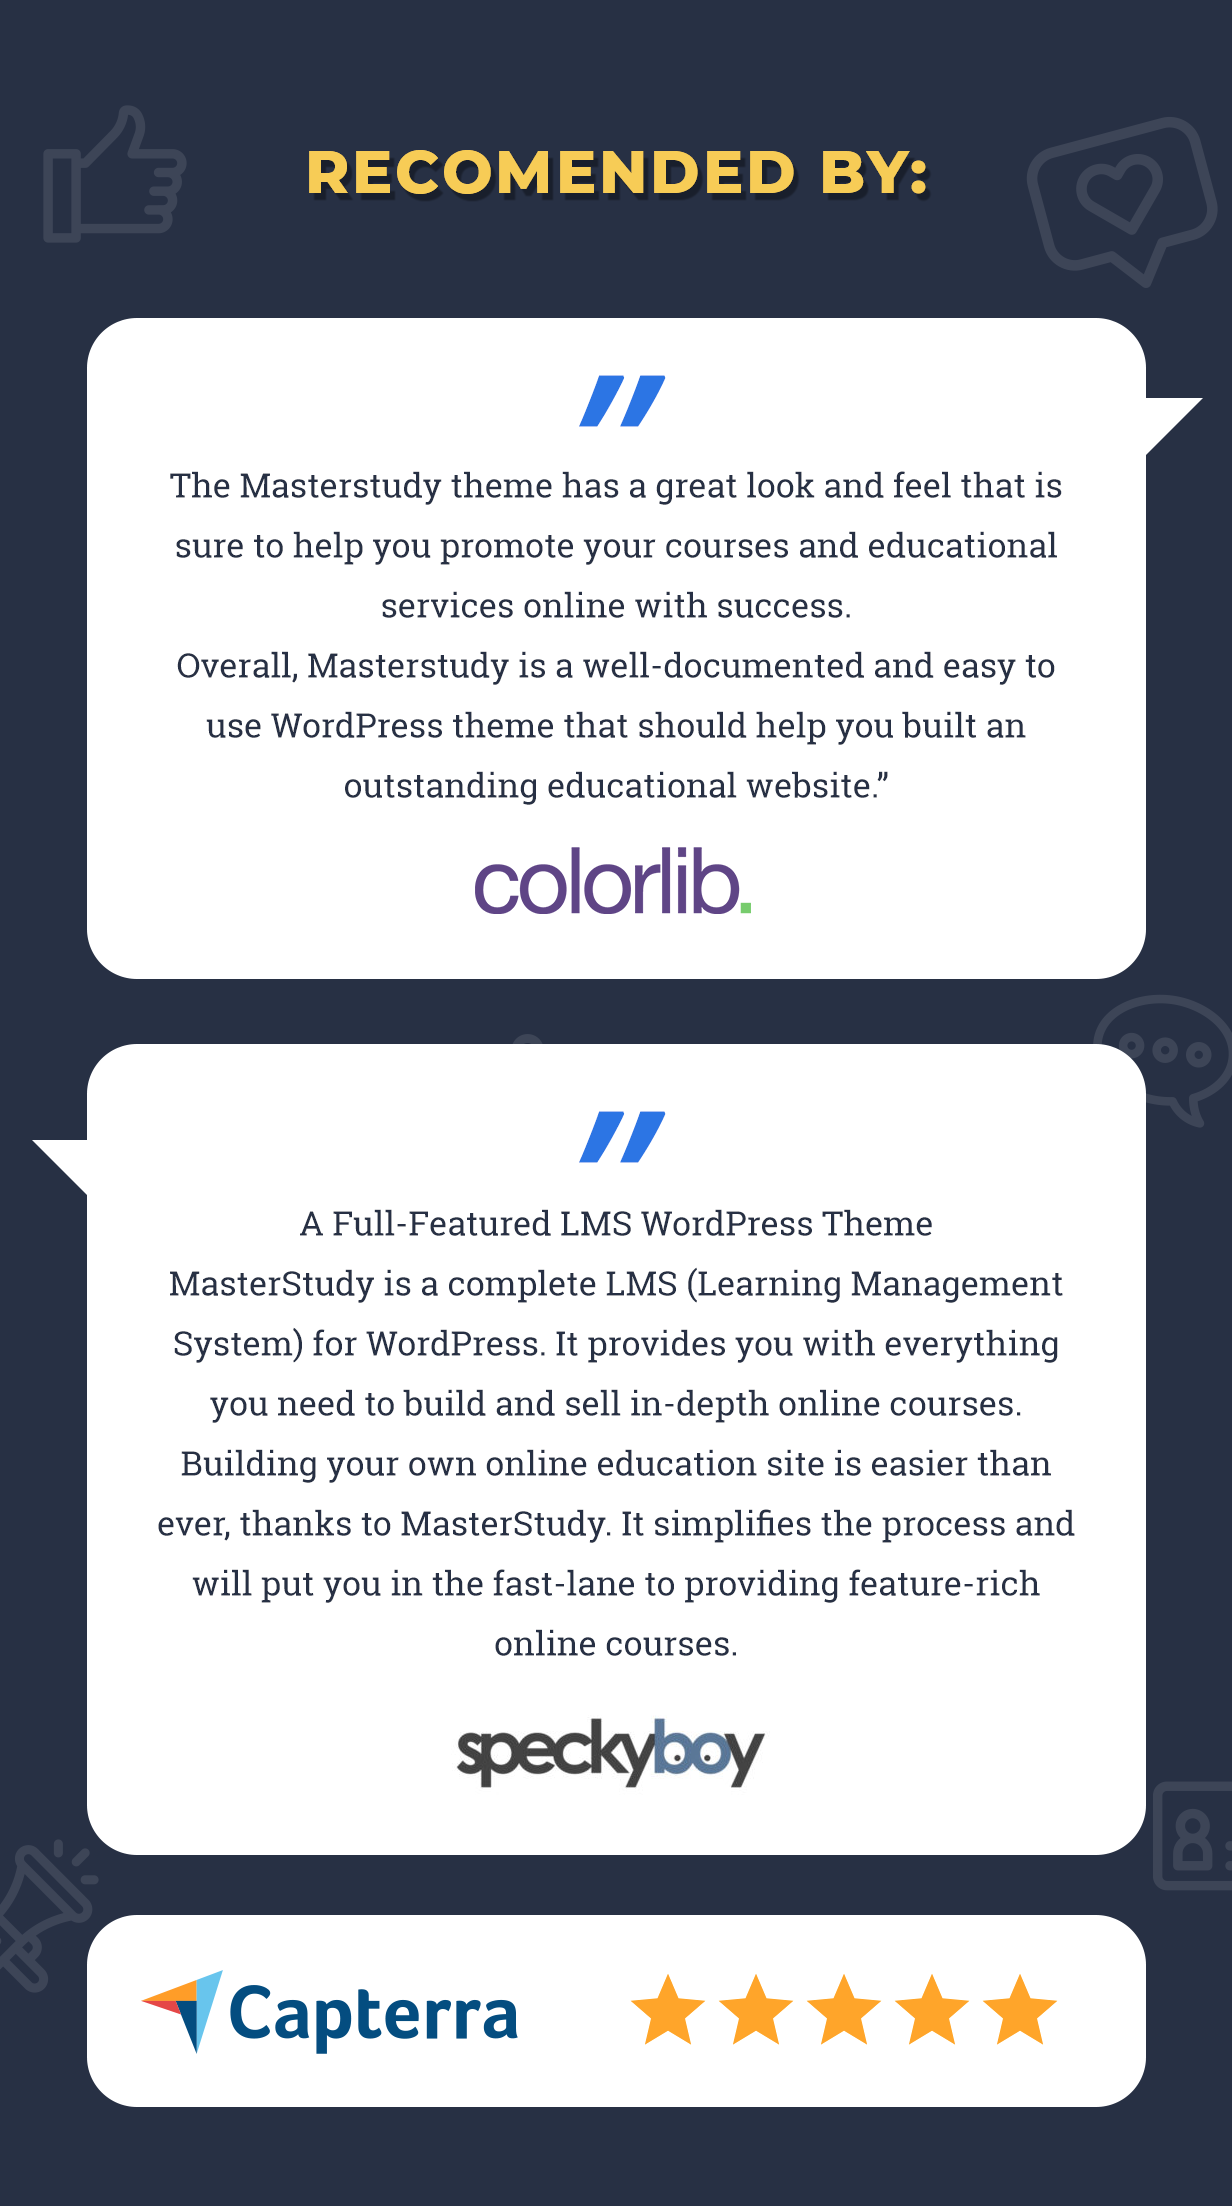 Education WordPress theme